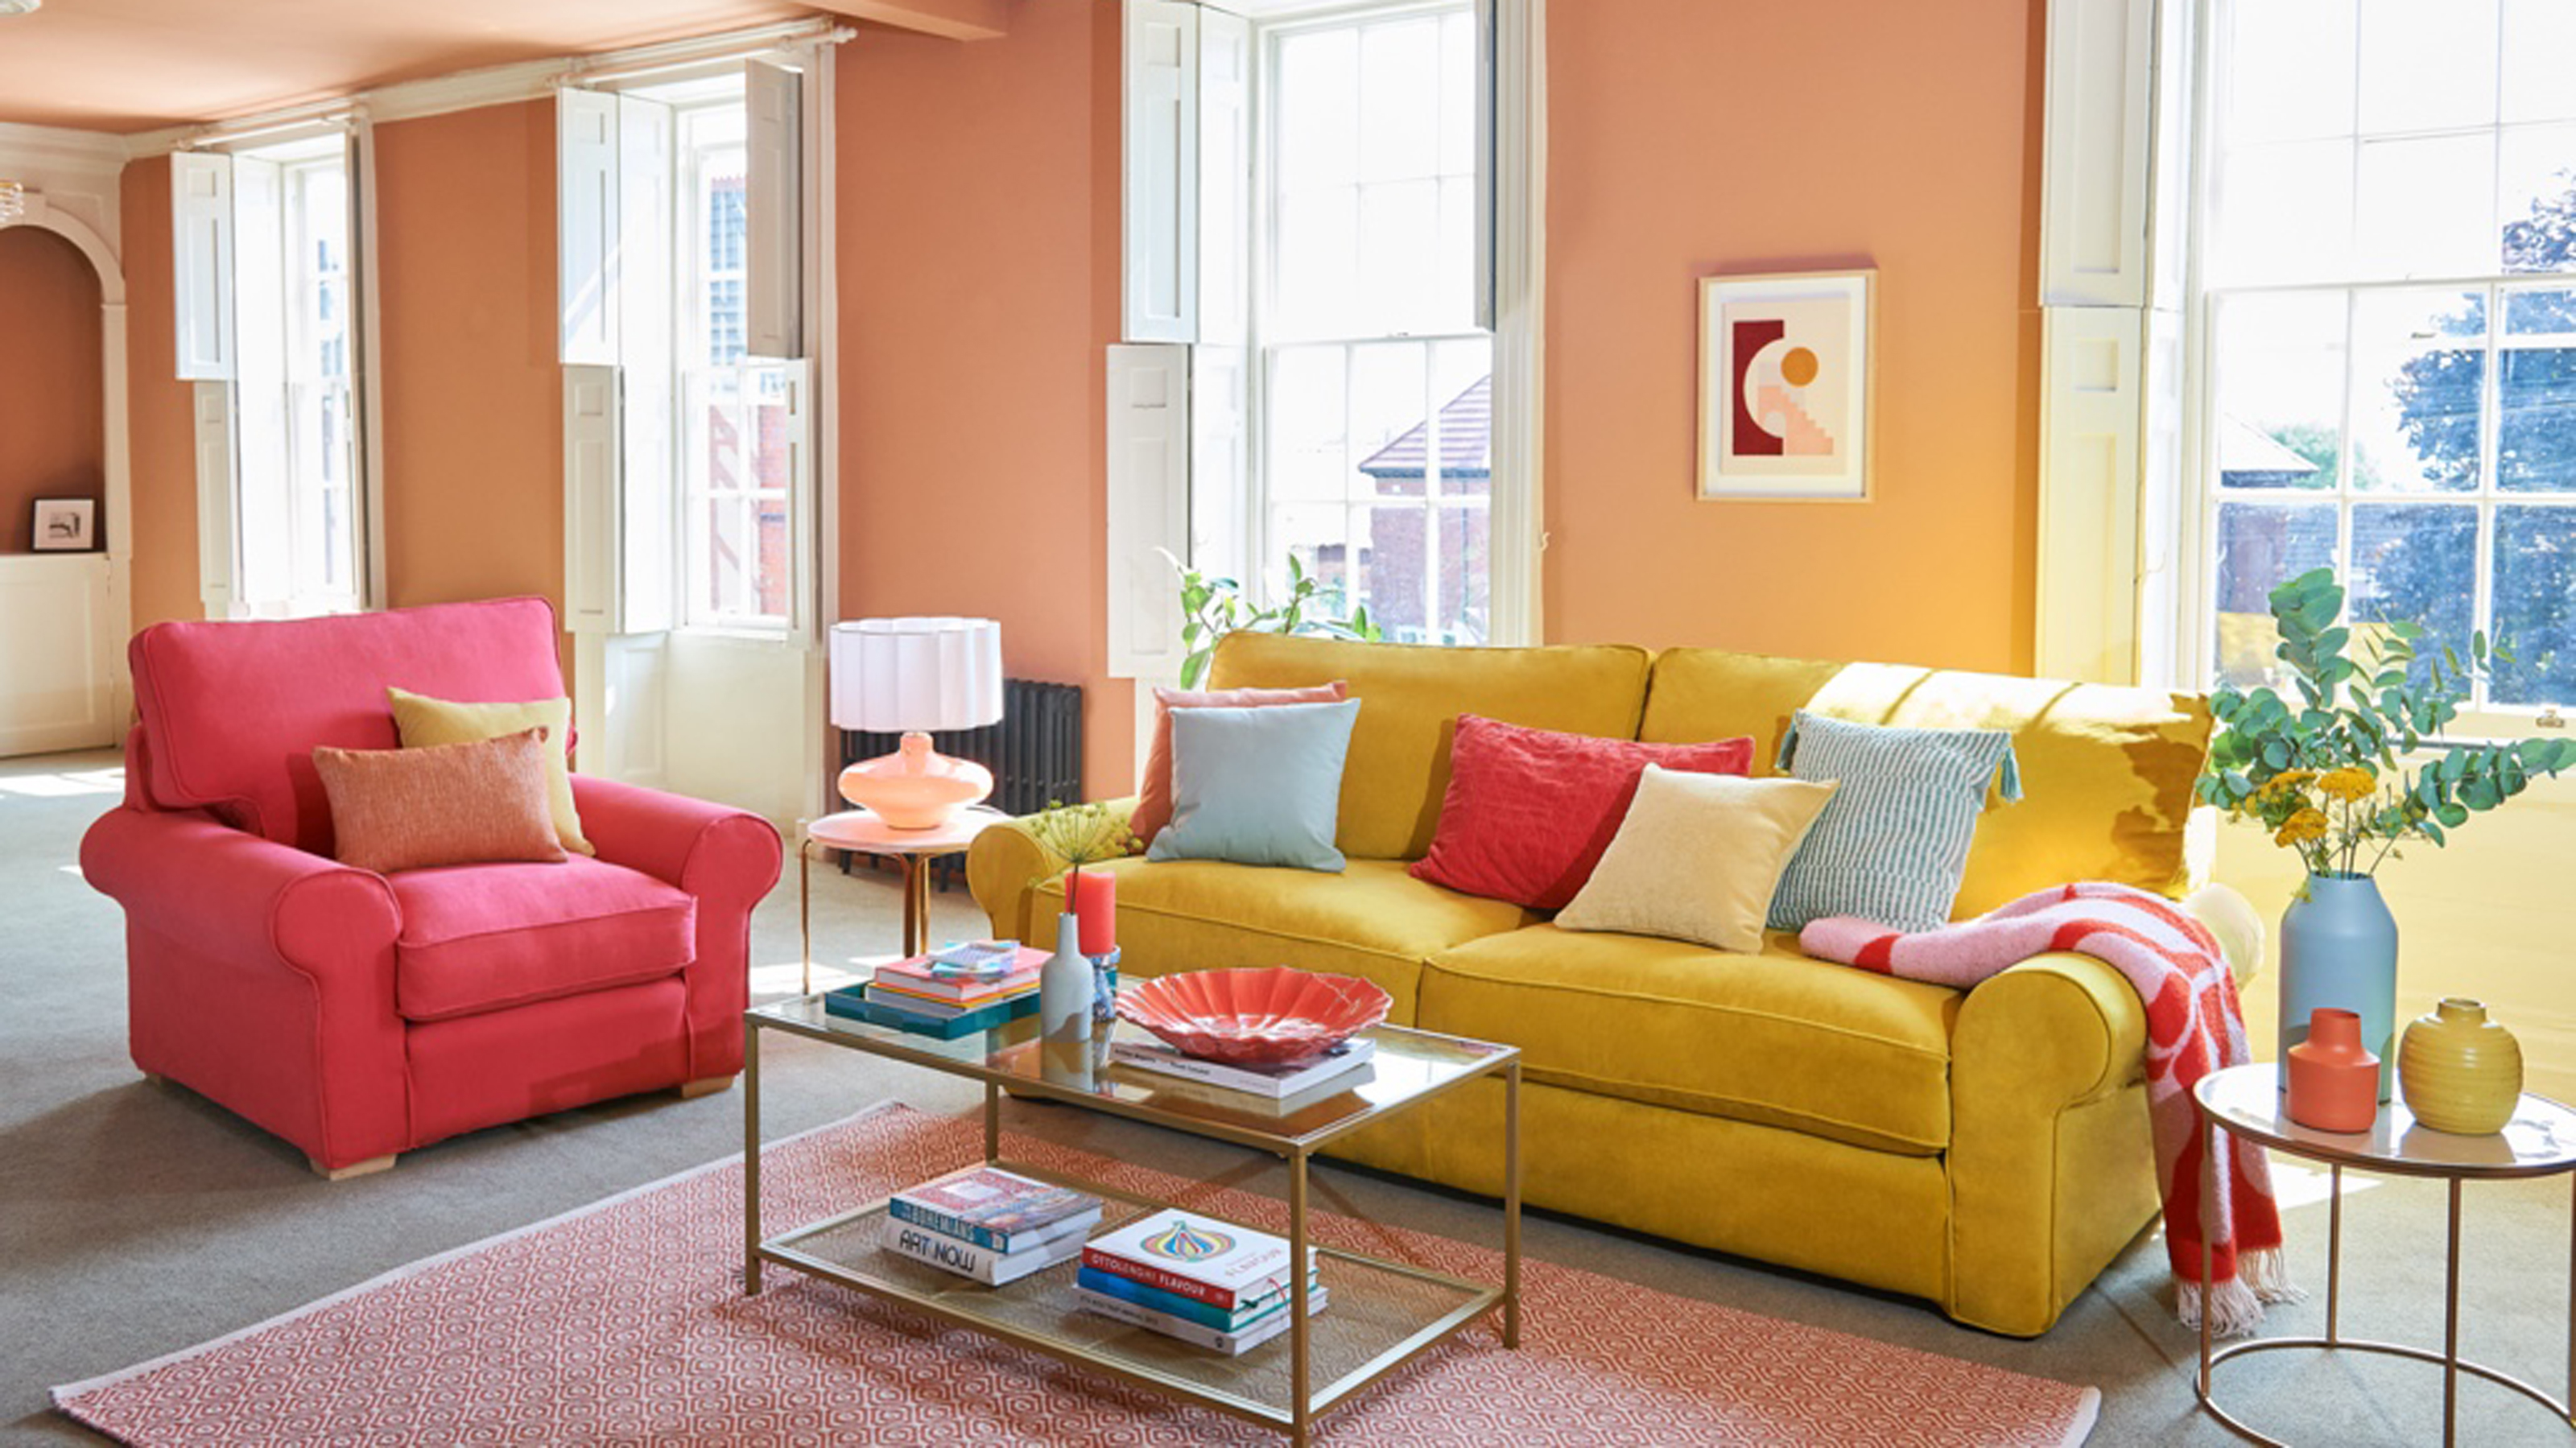 Empeorando Celo Colgar 11 colorful living room ideas for a vibrant update | Real Homes